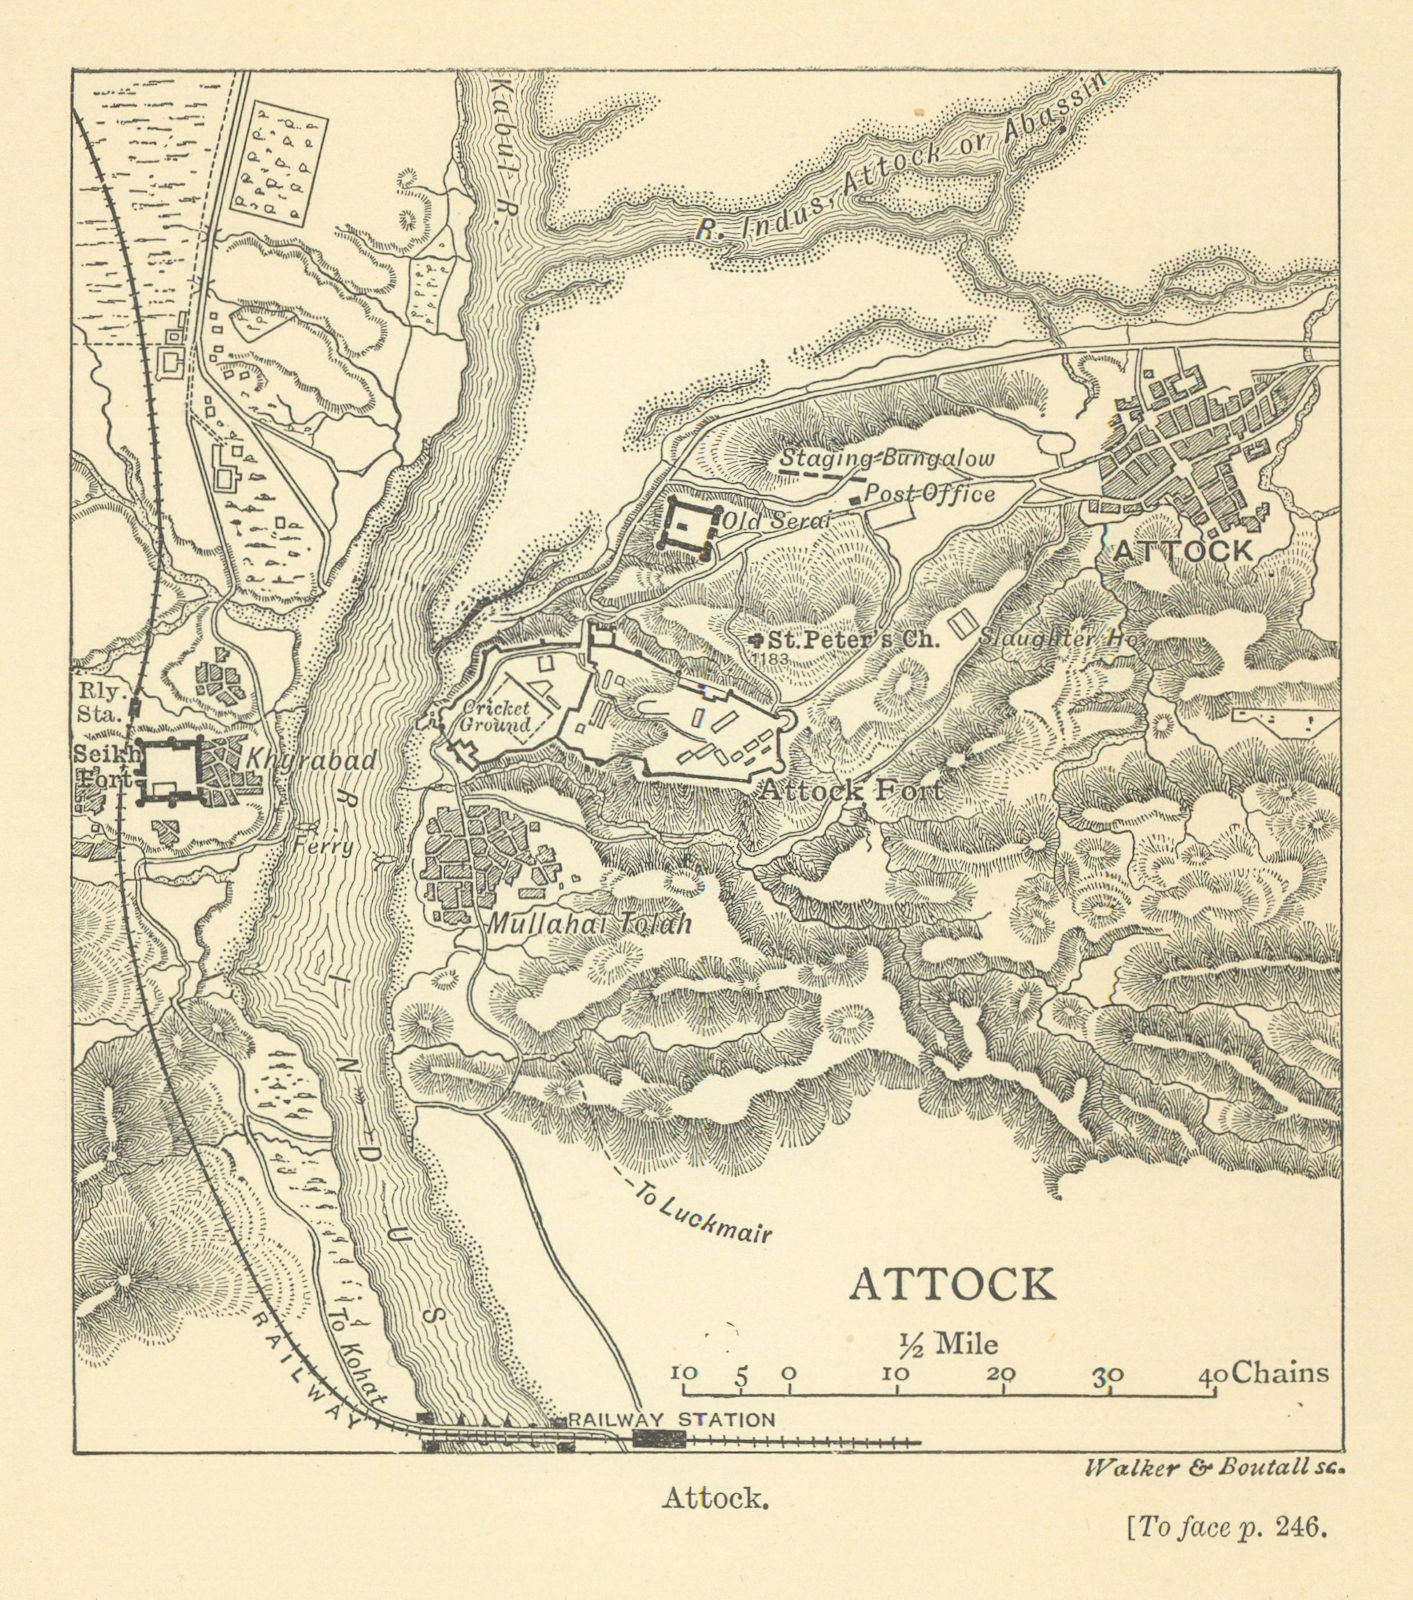 PAKISTAN. Attock town & Attock Fort sketch map. Khairabad. Sikh Fort 1905